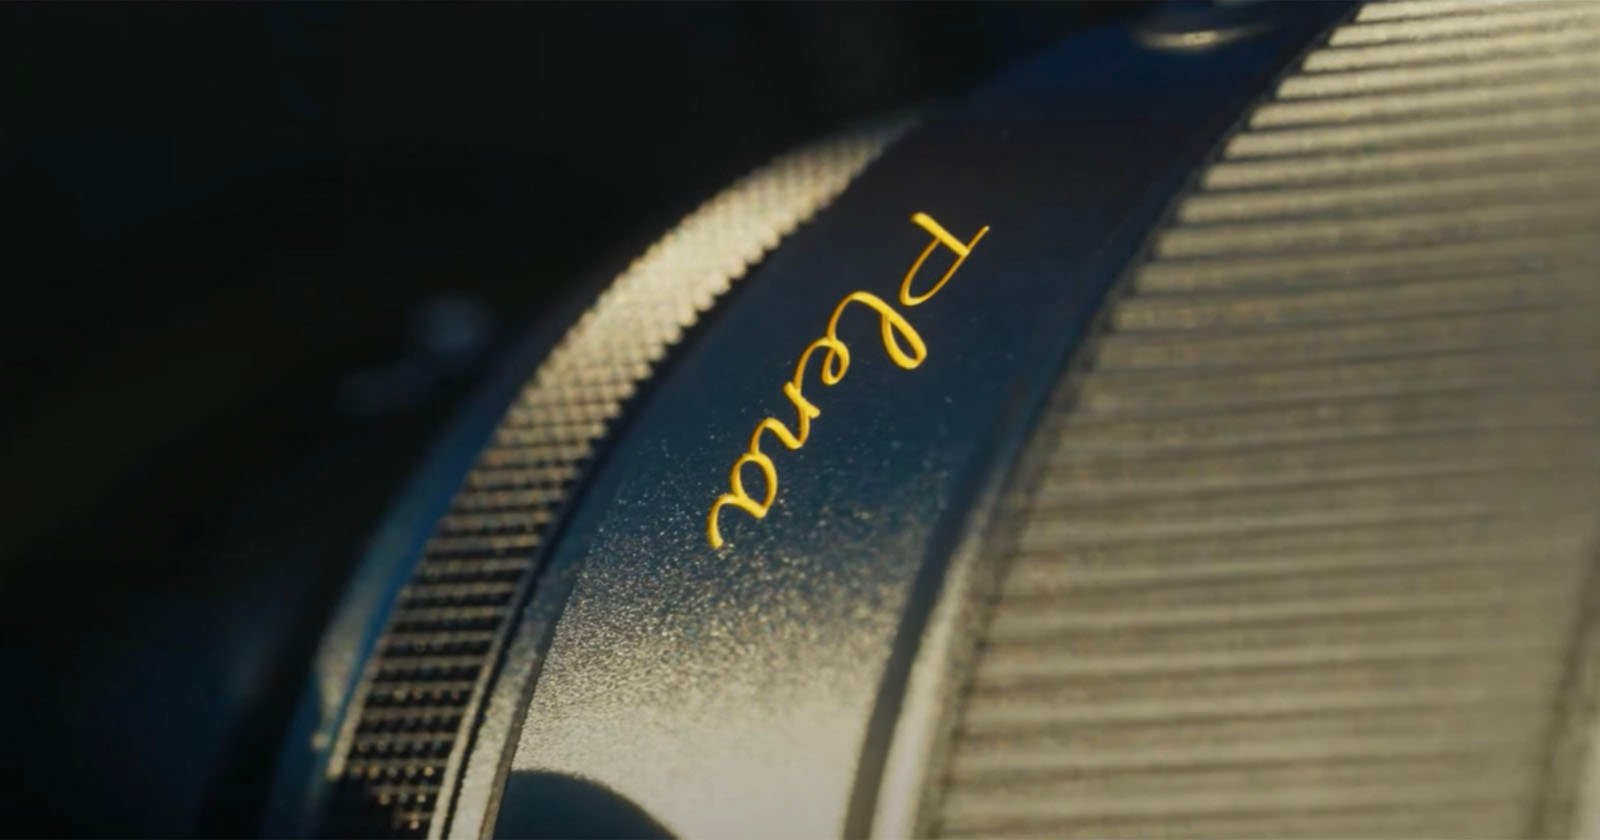 Nikon Teases a New Plena Lens That Channels the Noct Spirit